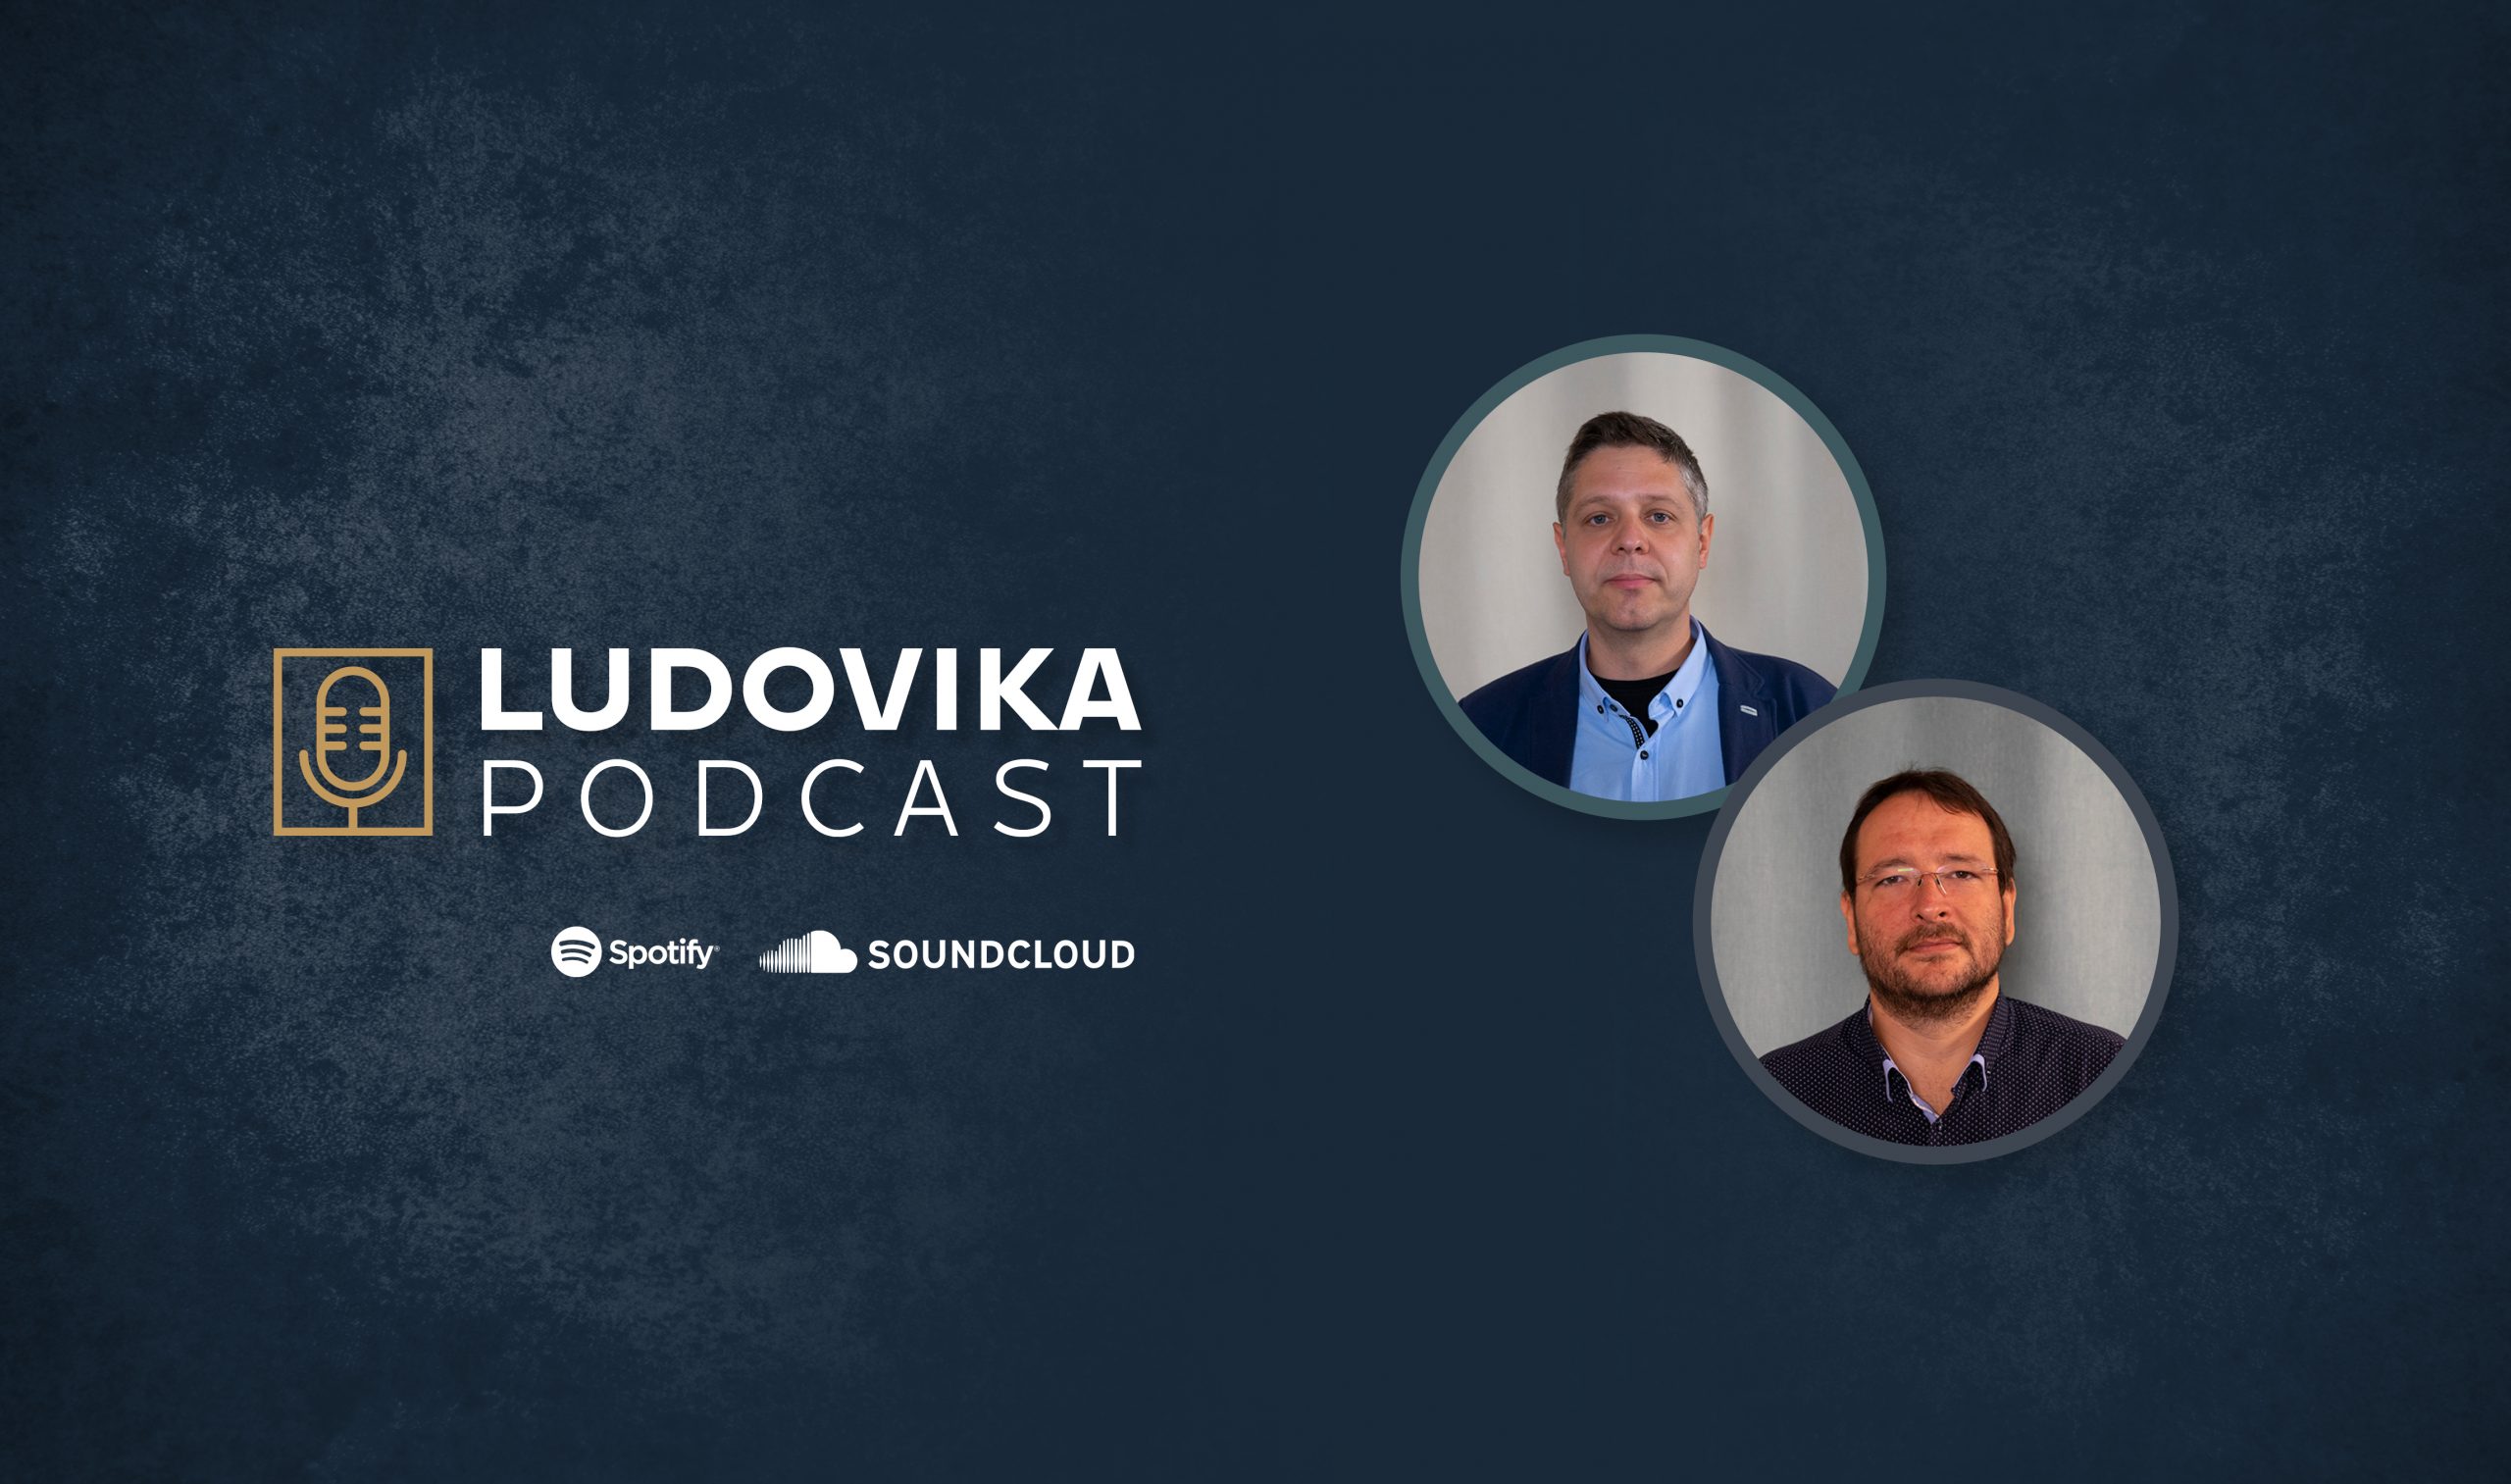 Ludovika_Podcast_Merkovity-Sarnyai_1100x650